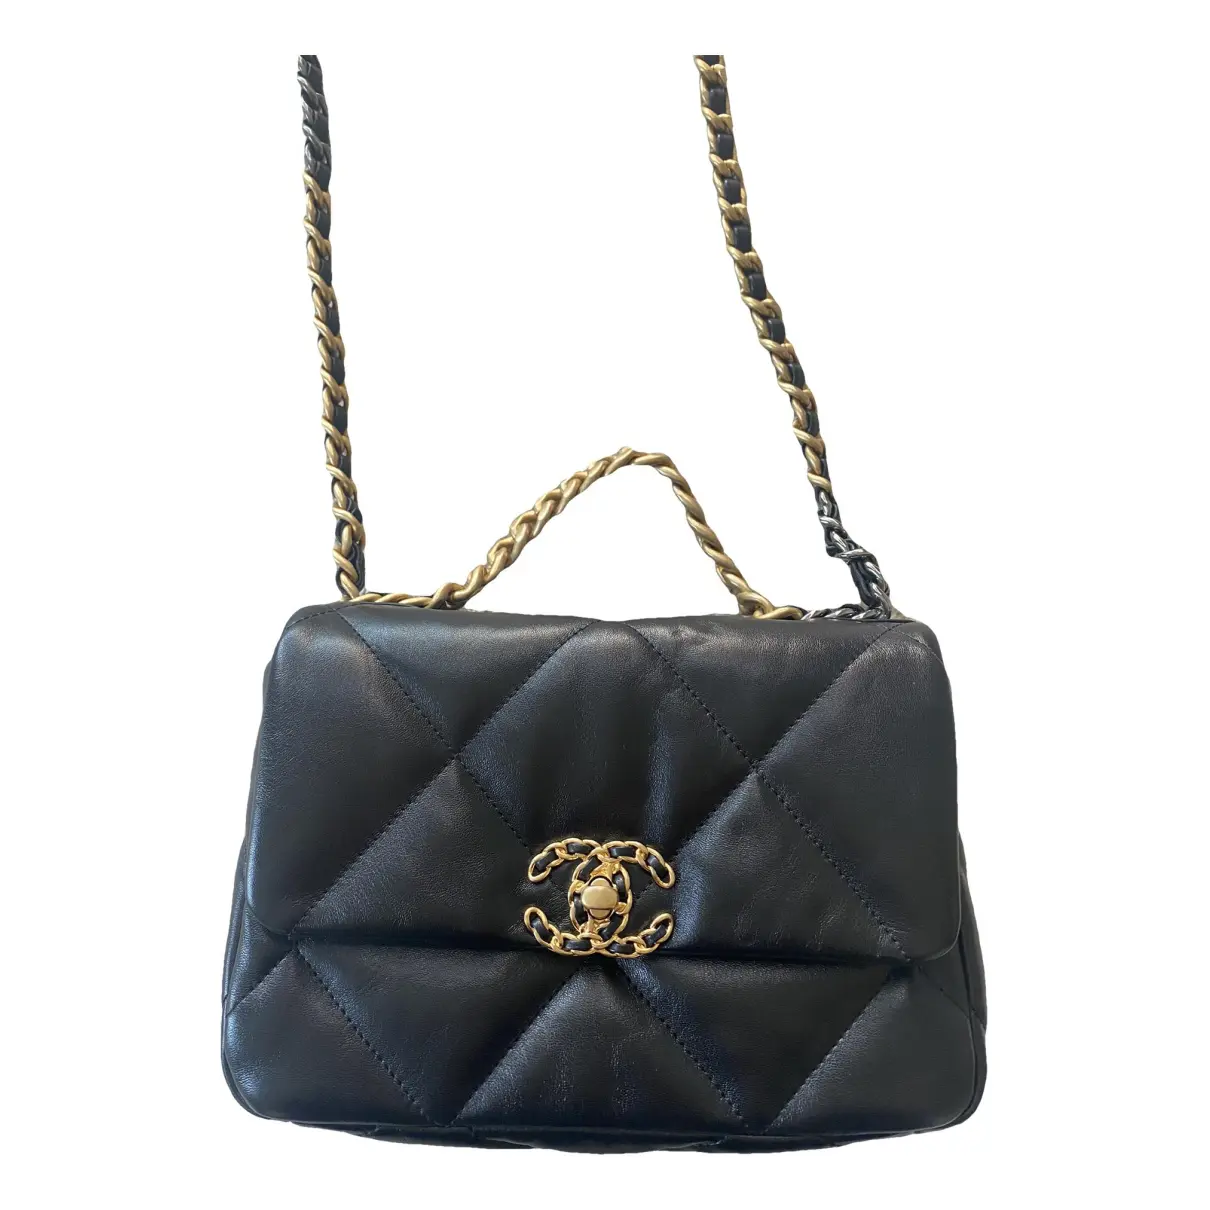 Chanel 19 leather handbag Chanel Black in Leather - 9103726